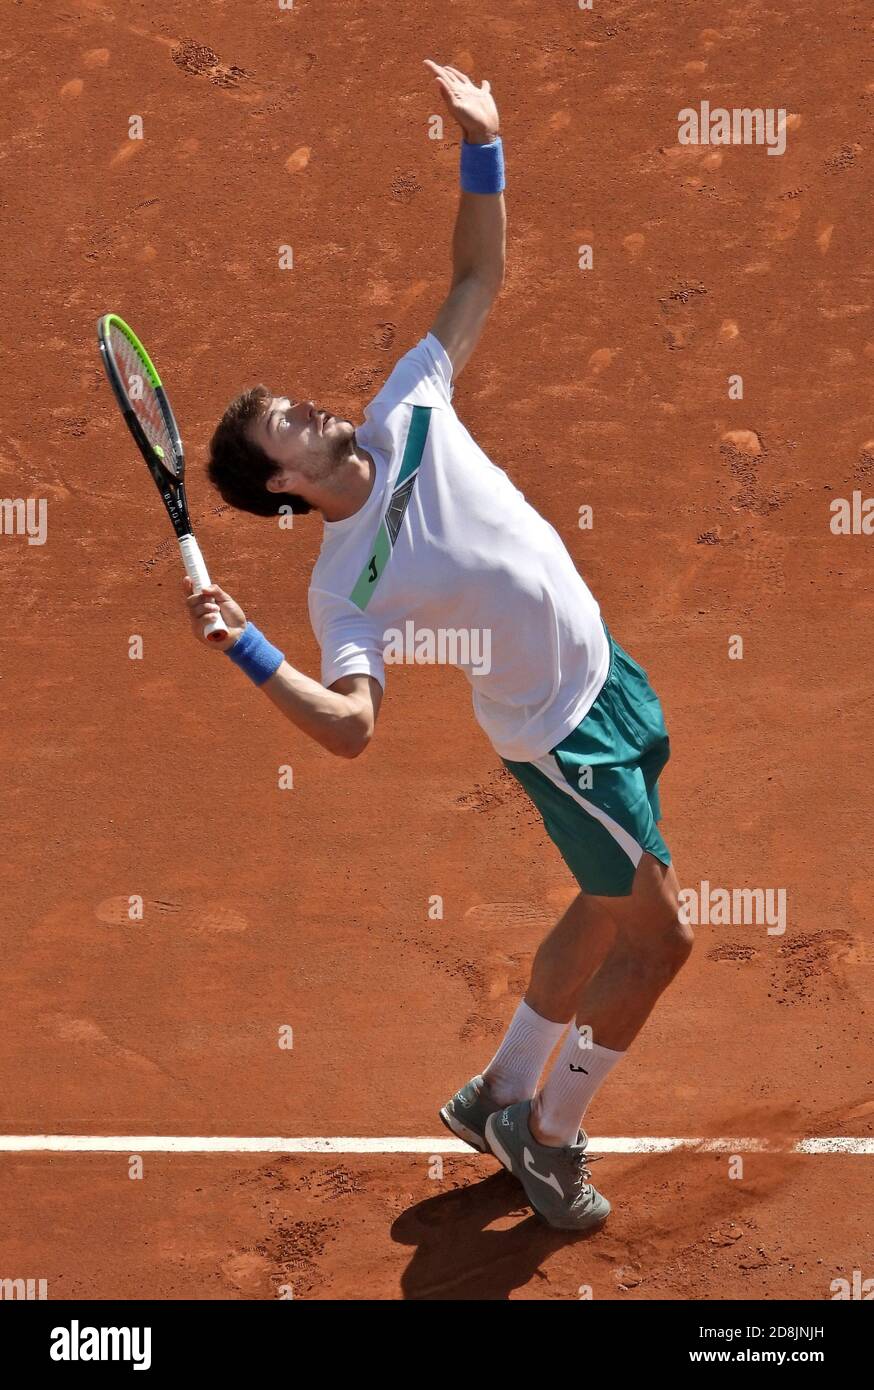 Marbella, Spain. 30th Oct 2020. 2020 #ATP Tennis Challengers Tour